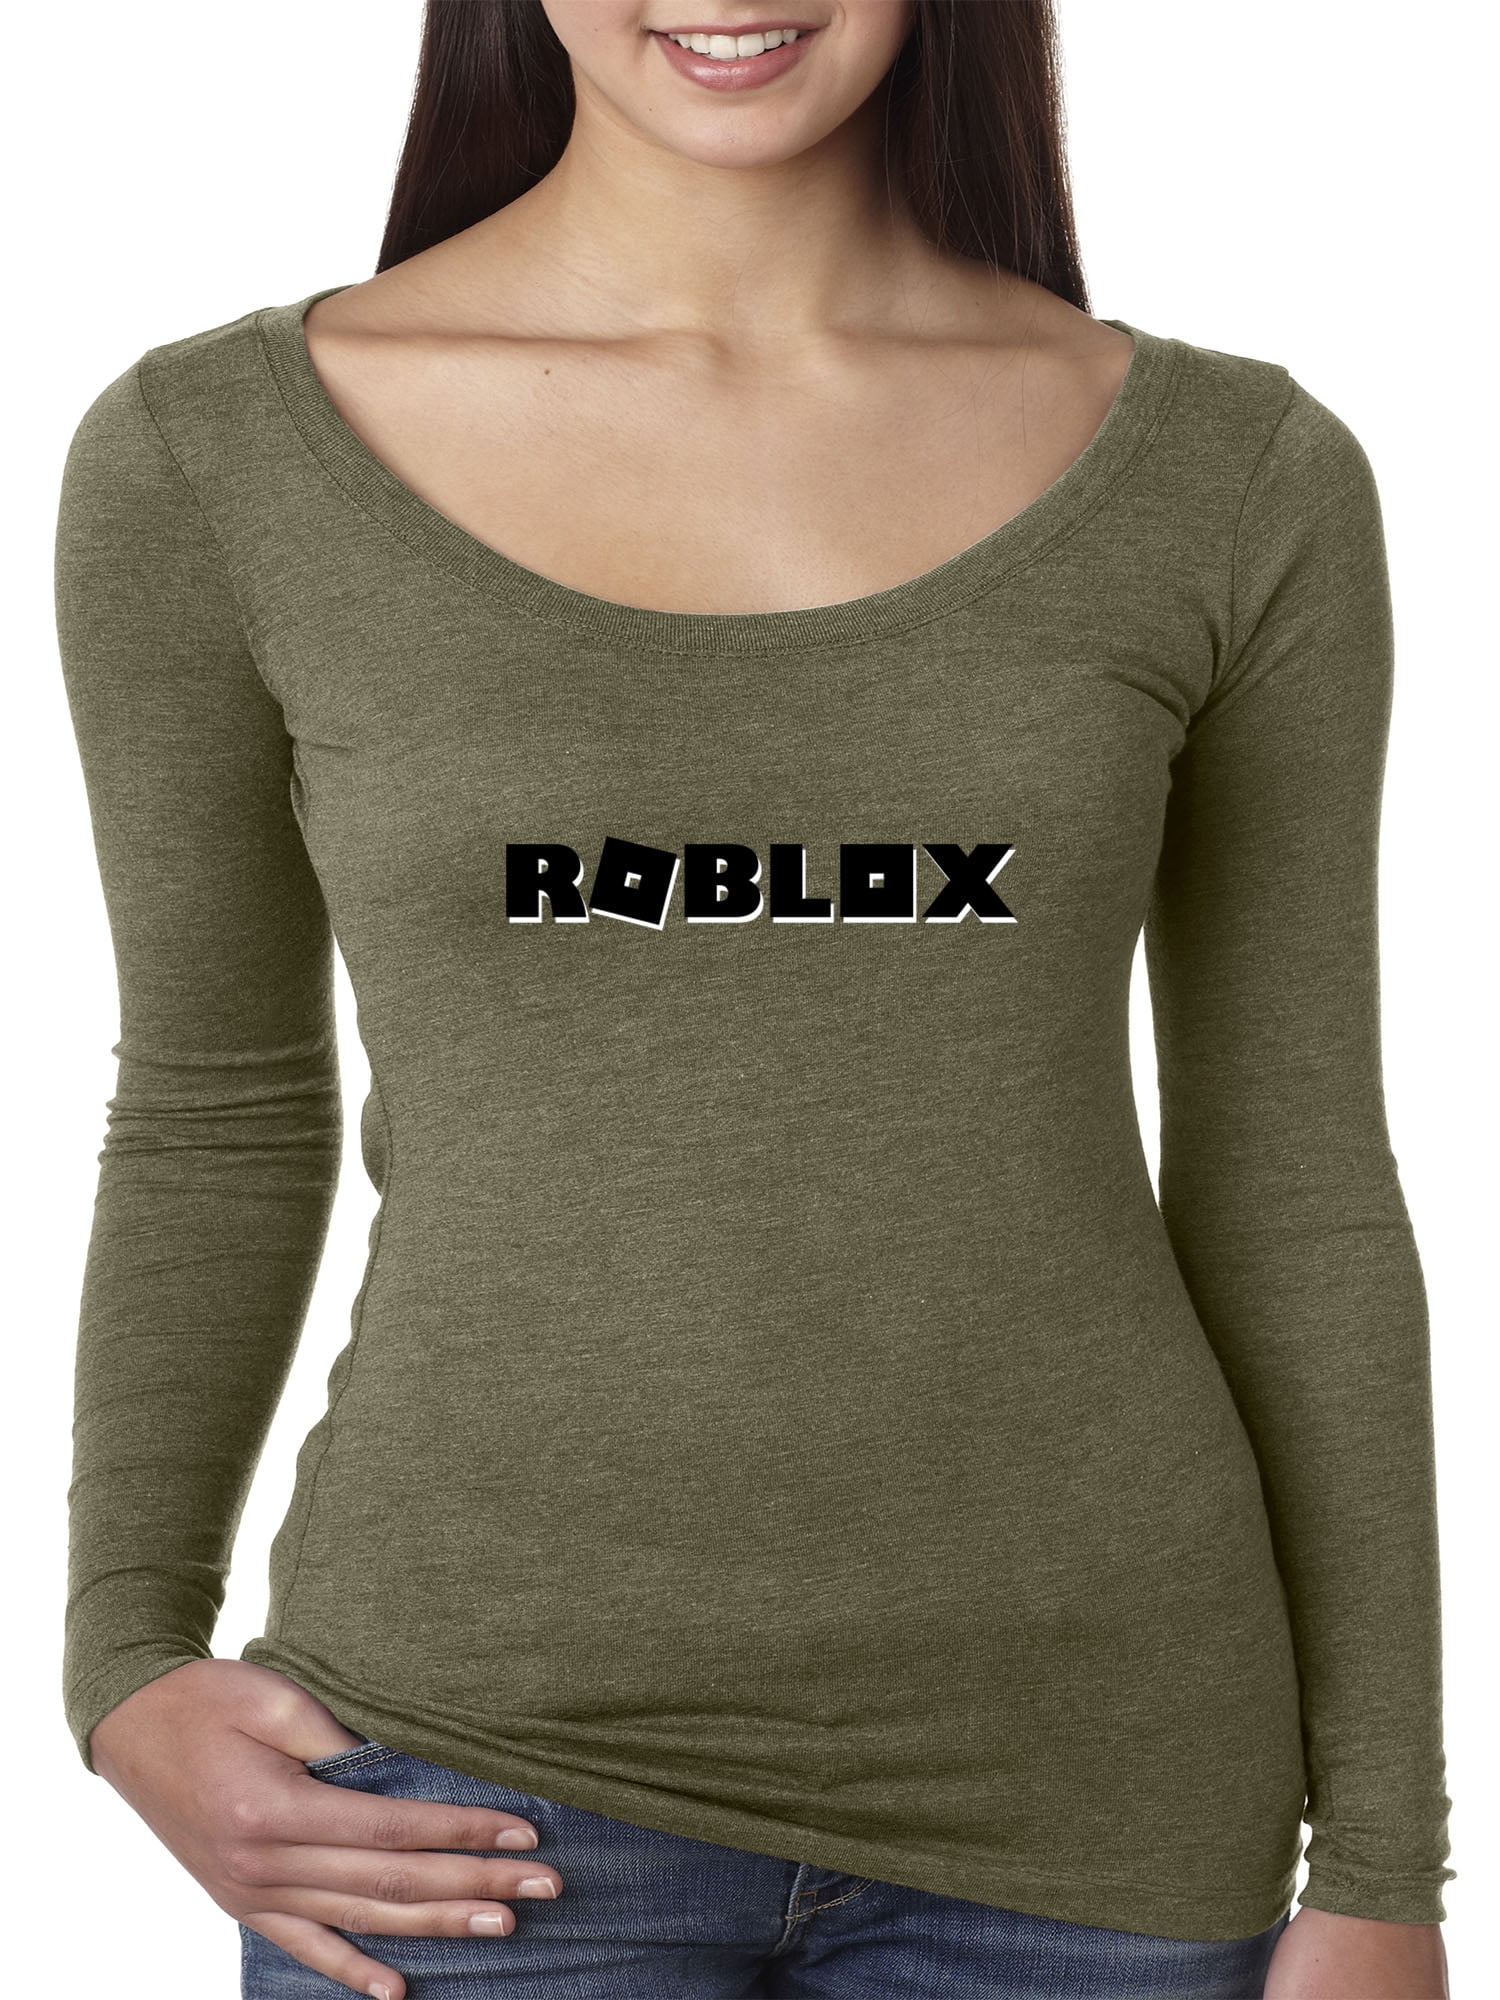 New Way New Way 1168 Women S Long Sleeve T Shirt Roblox Block Logo Game Accent 2xl Military Green Walmart Com Walmart Com